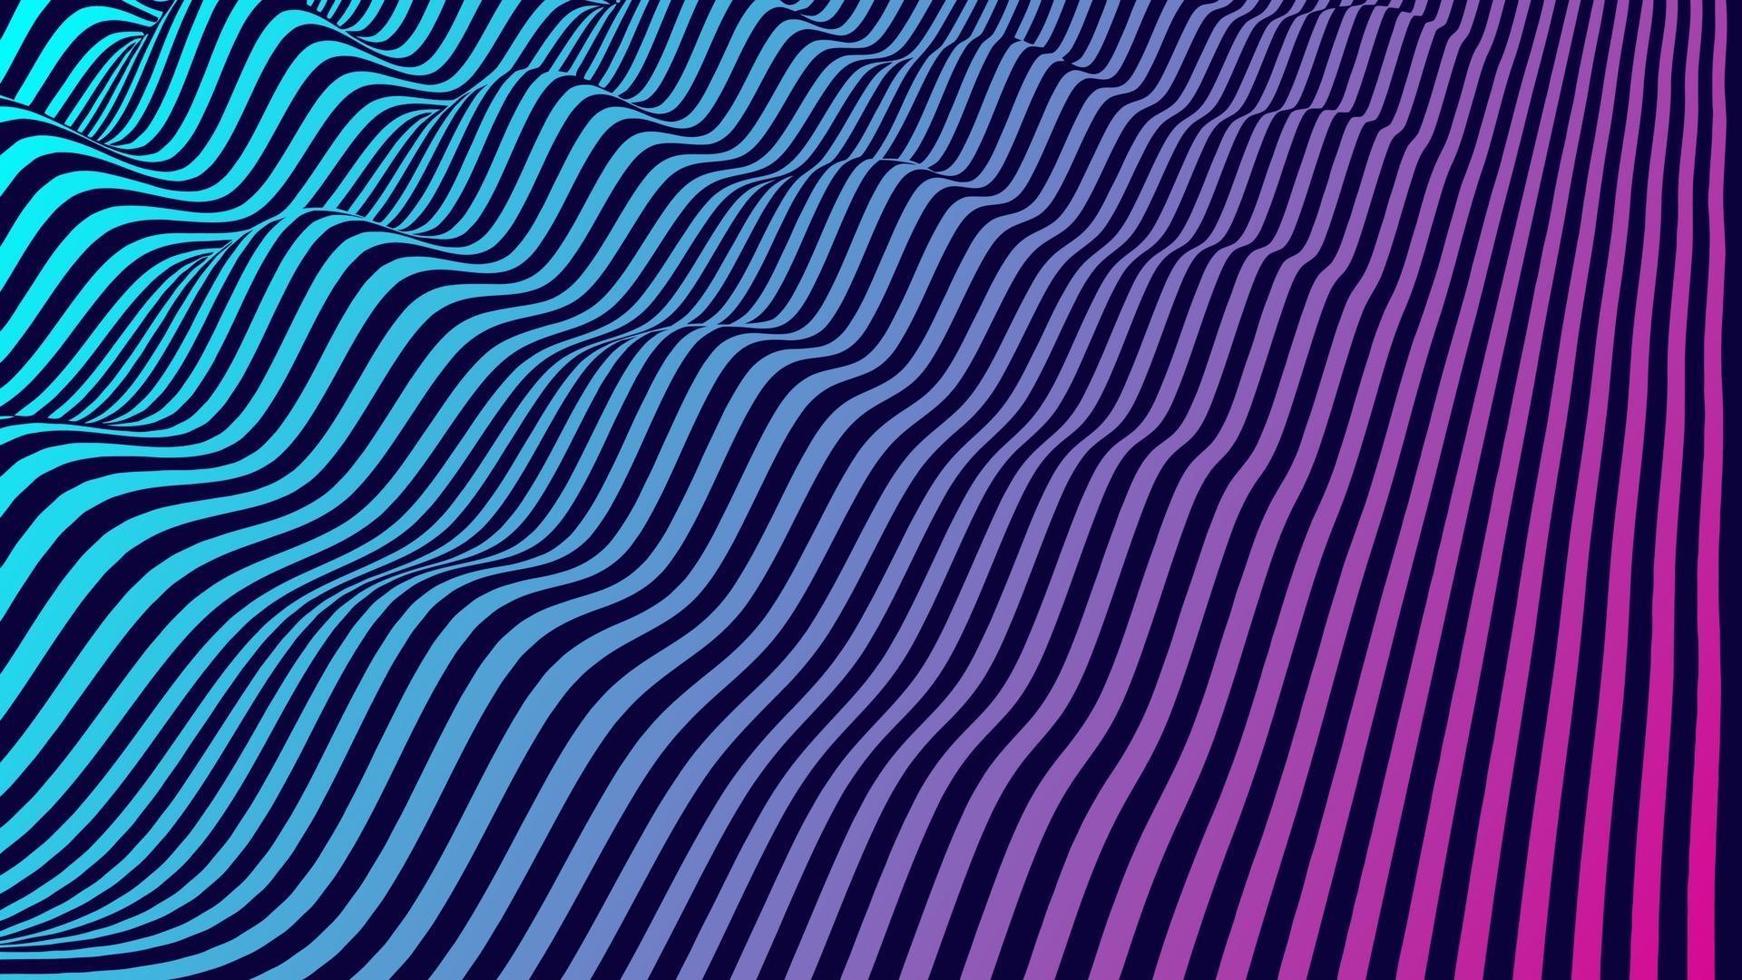 Fondo de vector abstracto vibrante con líneas paralelas onduladas azul y violeta